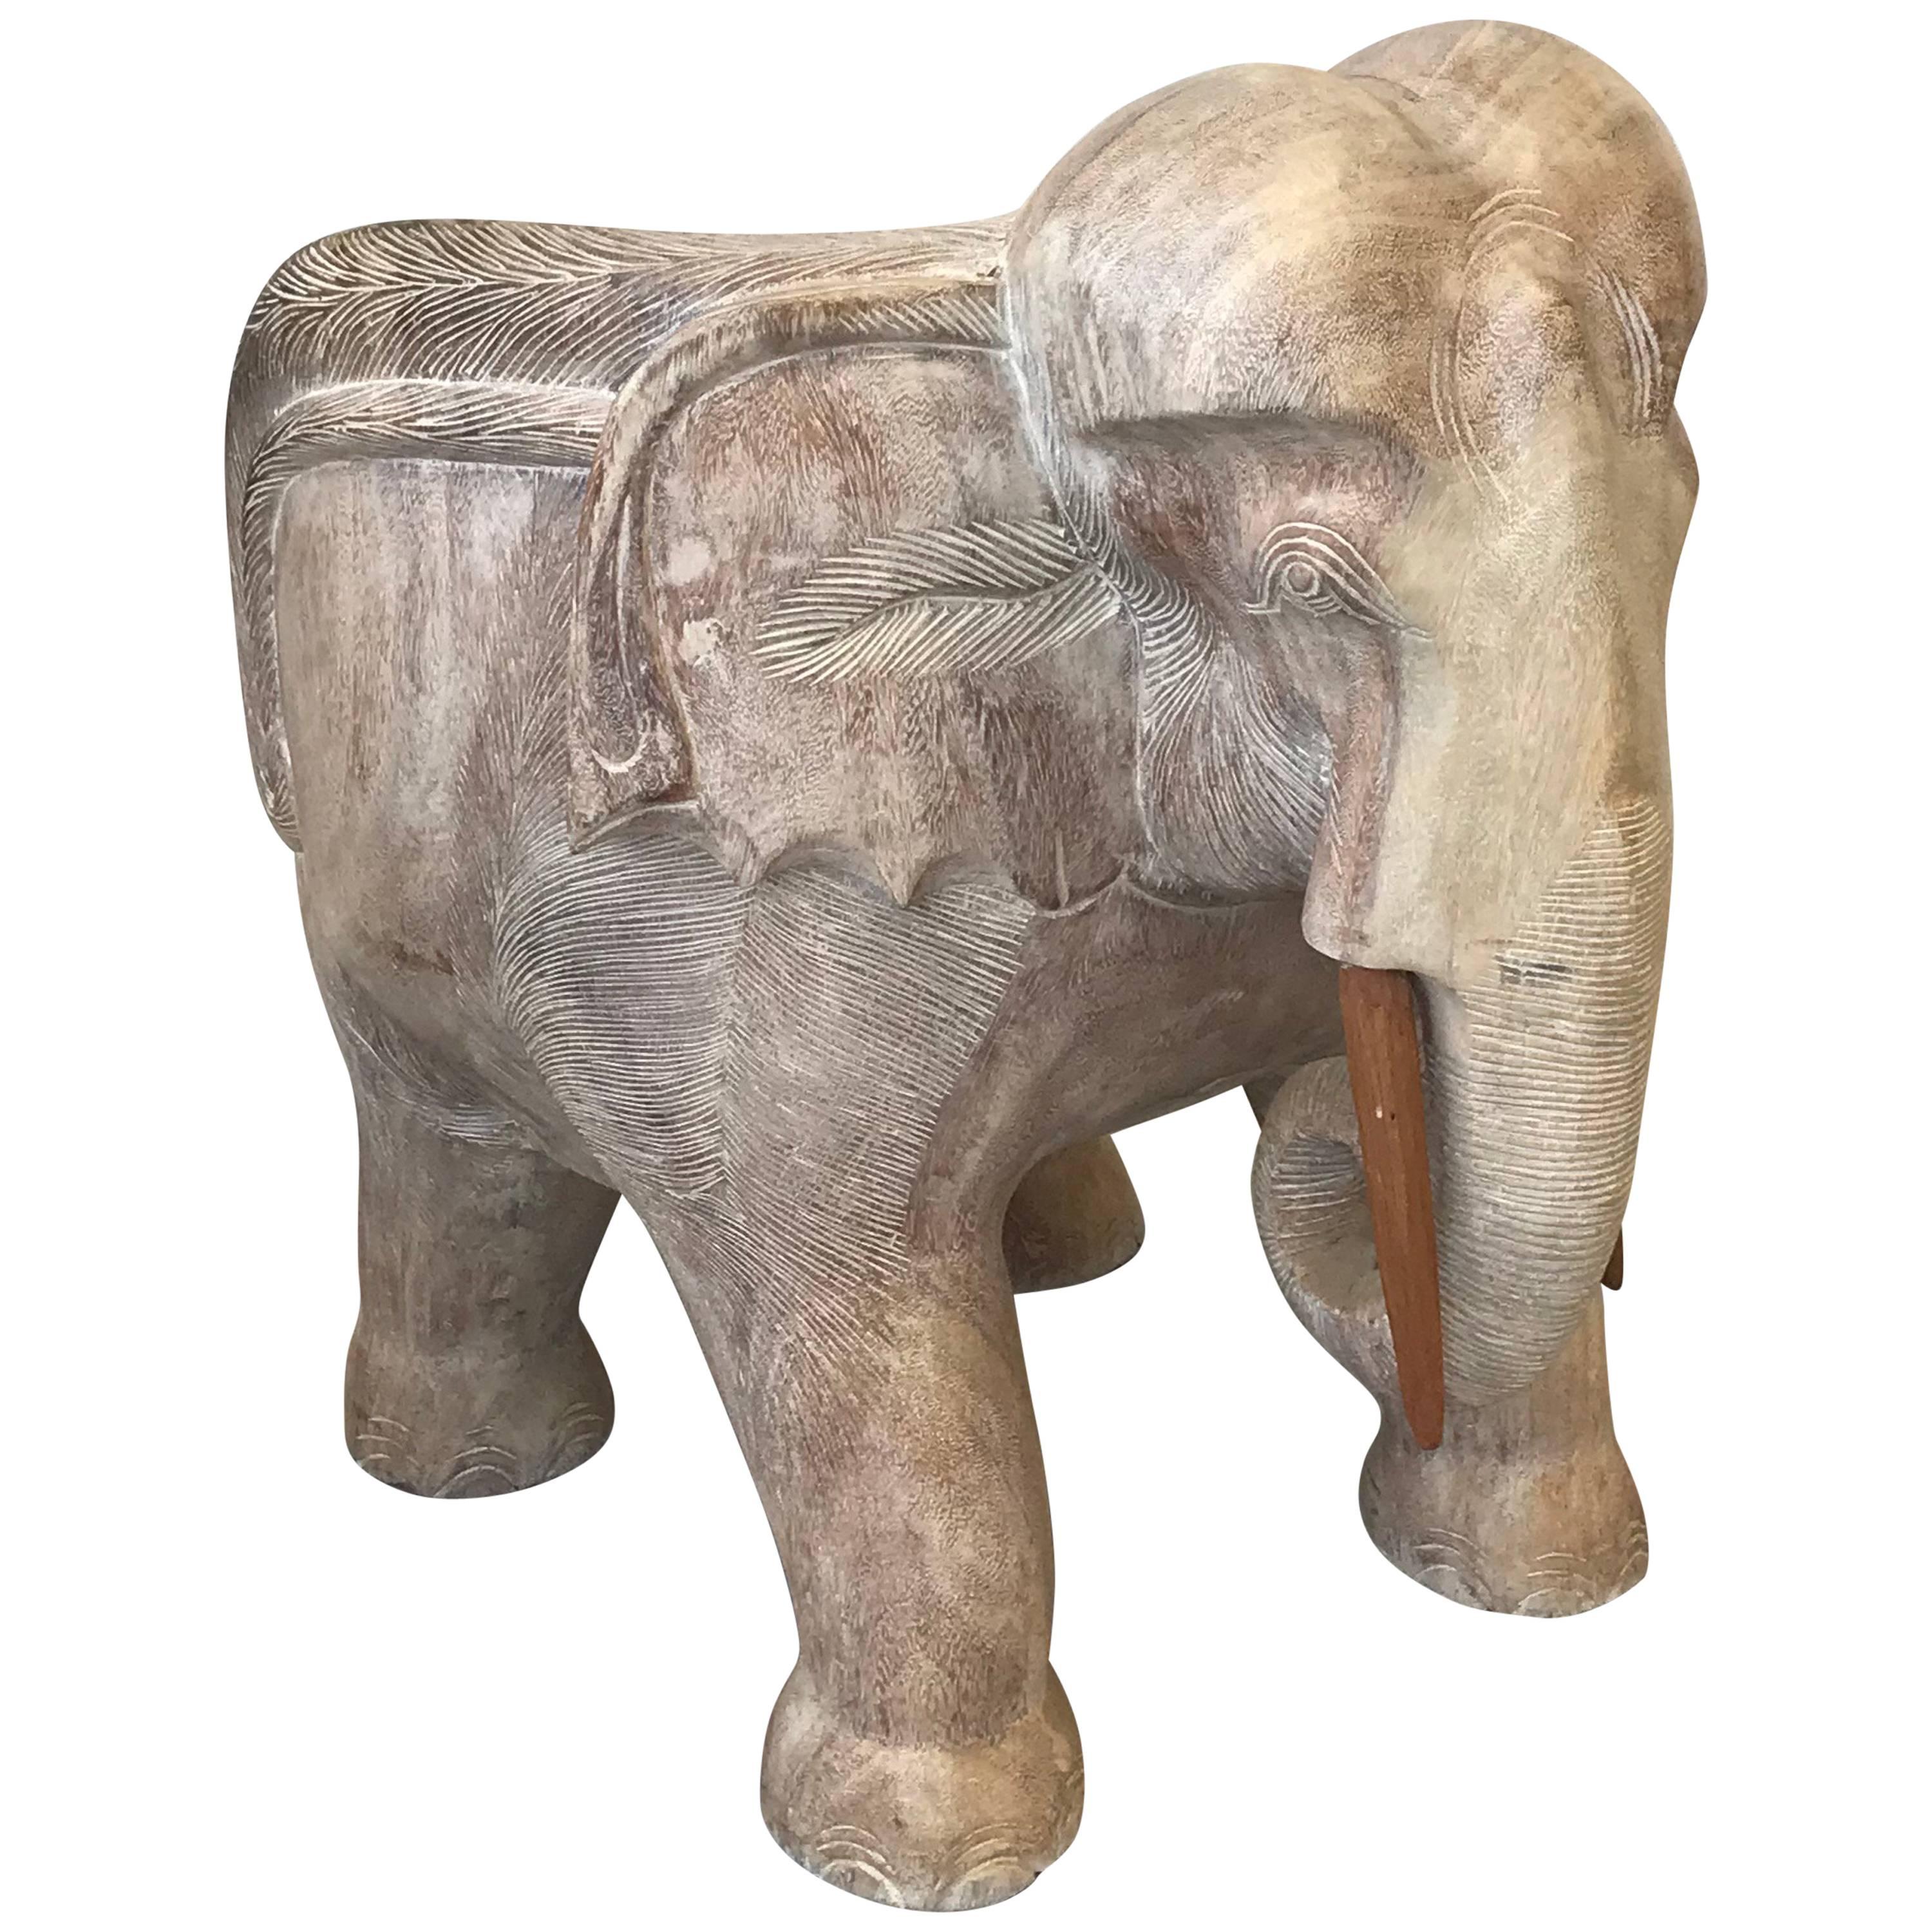 Wood Elephants - 35 For Sale on 1stDibs